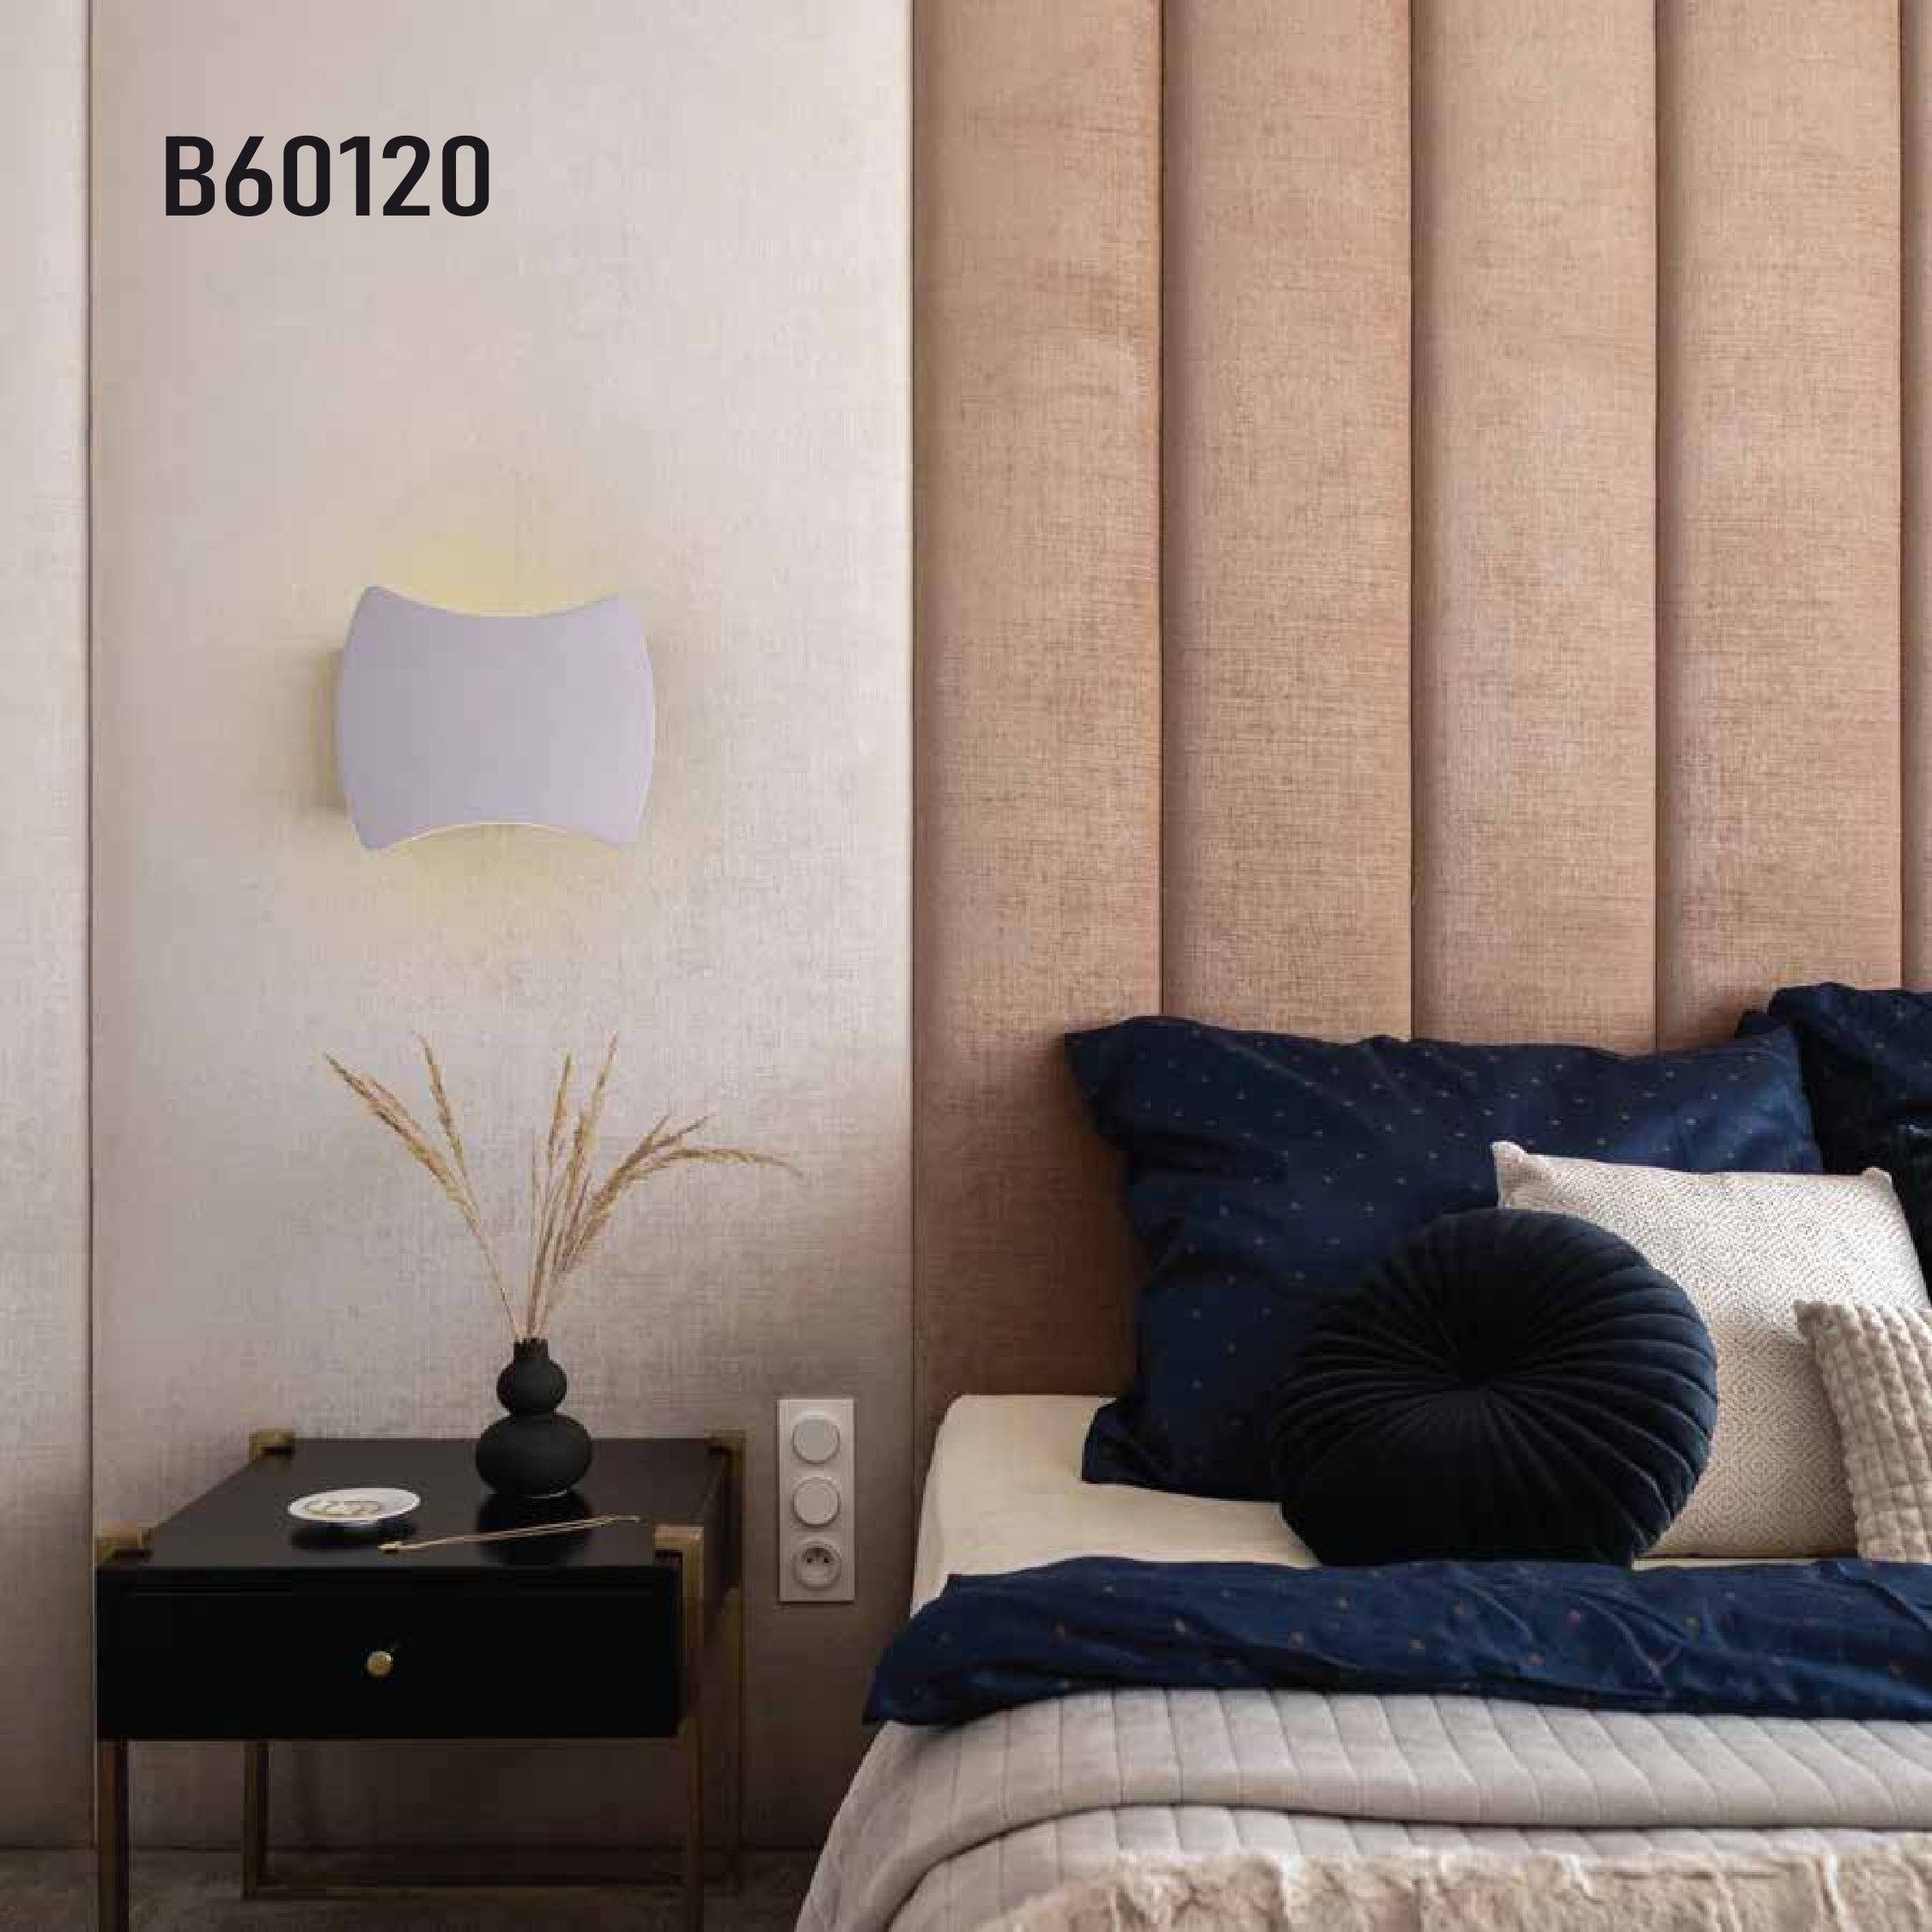 LED Outdoor Wall Light | B60120-2w-Black